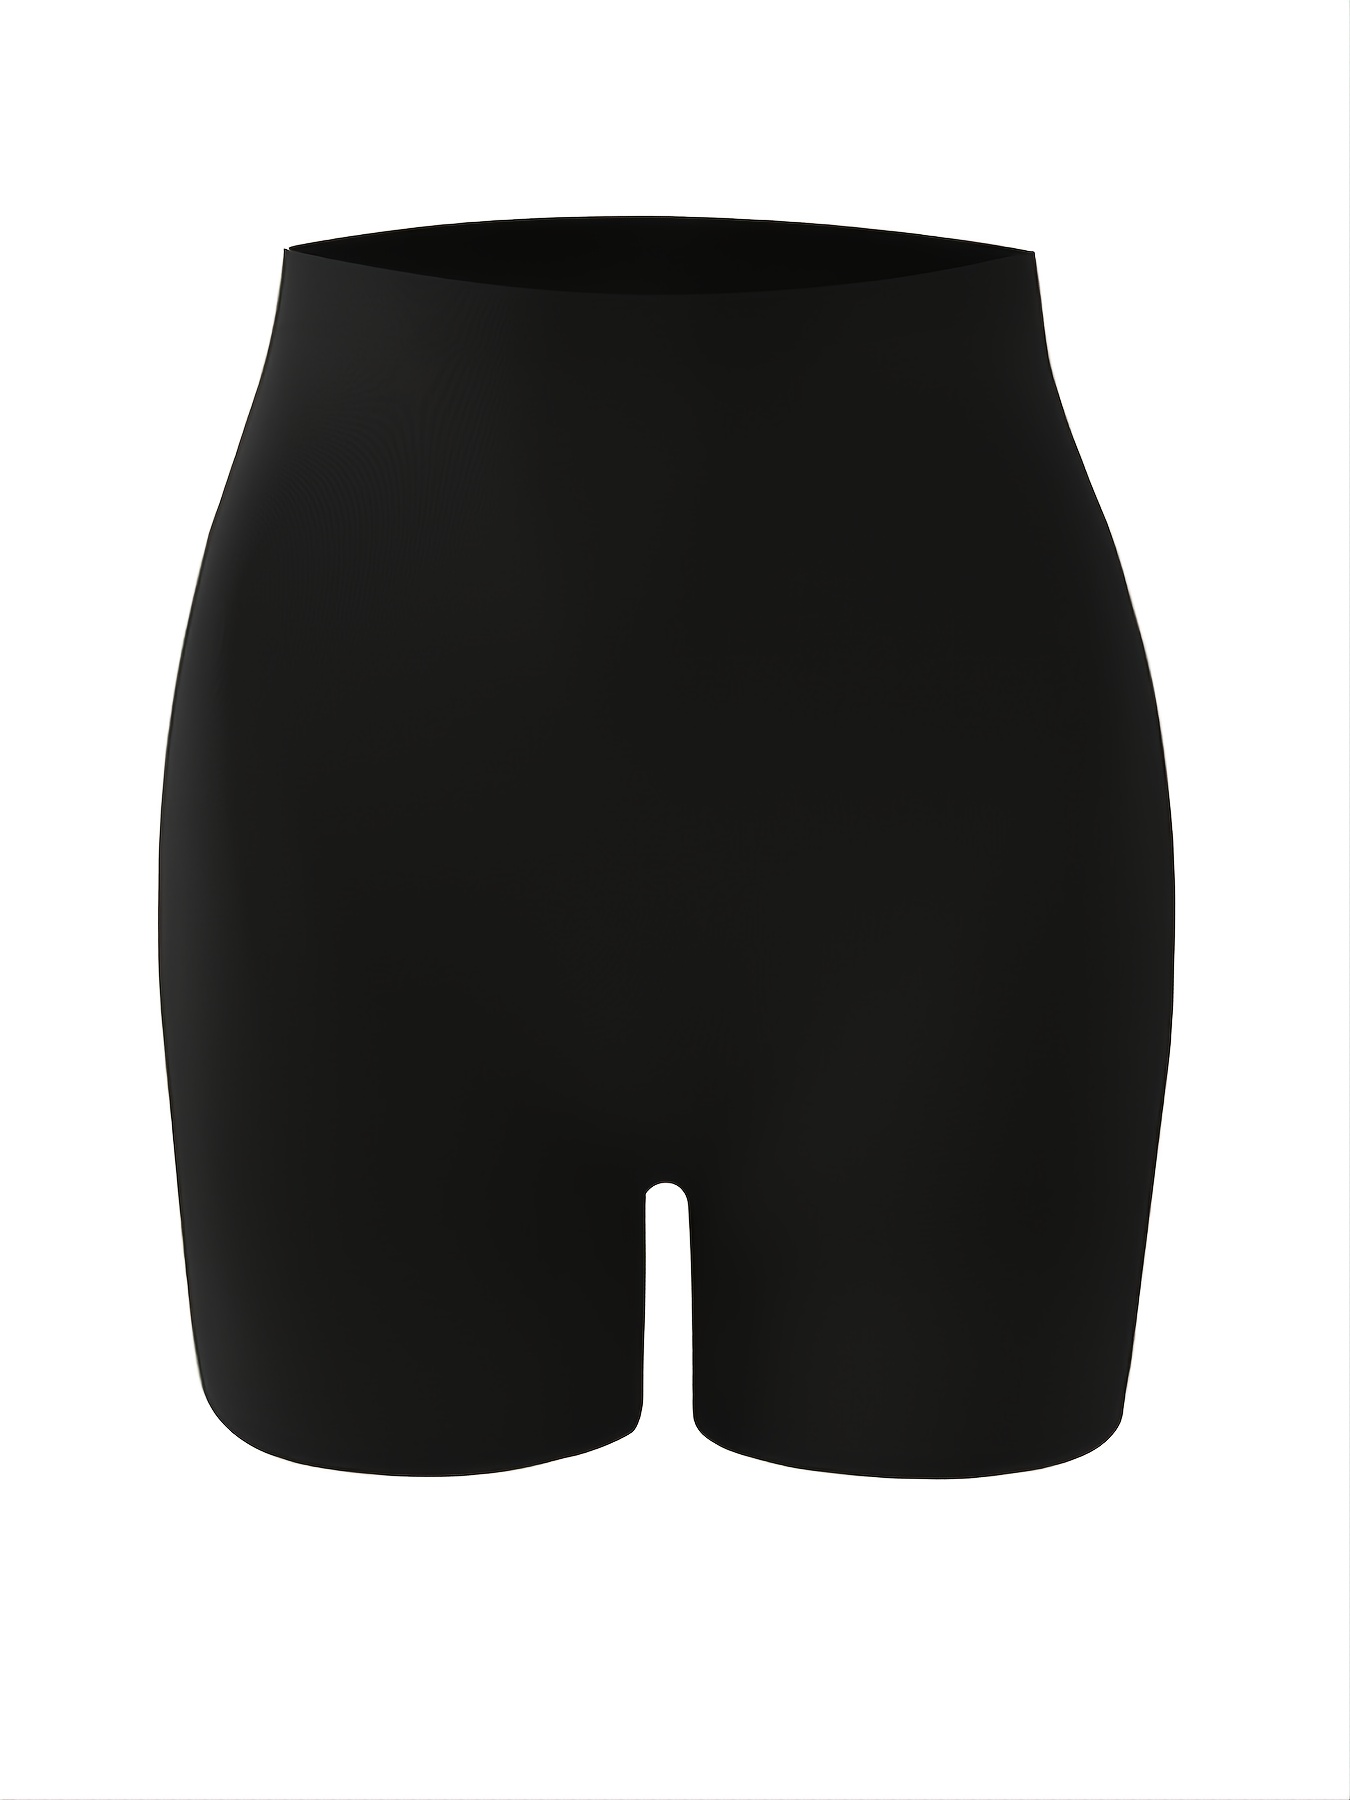 Womens Black Boyshorts Panties - Underwear, Clothing